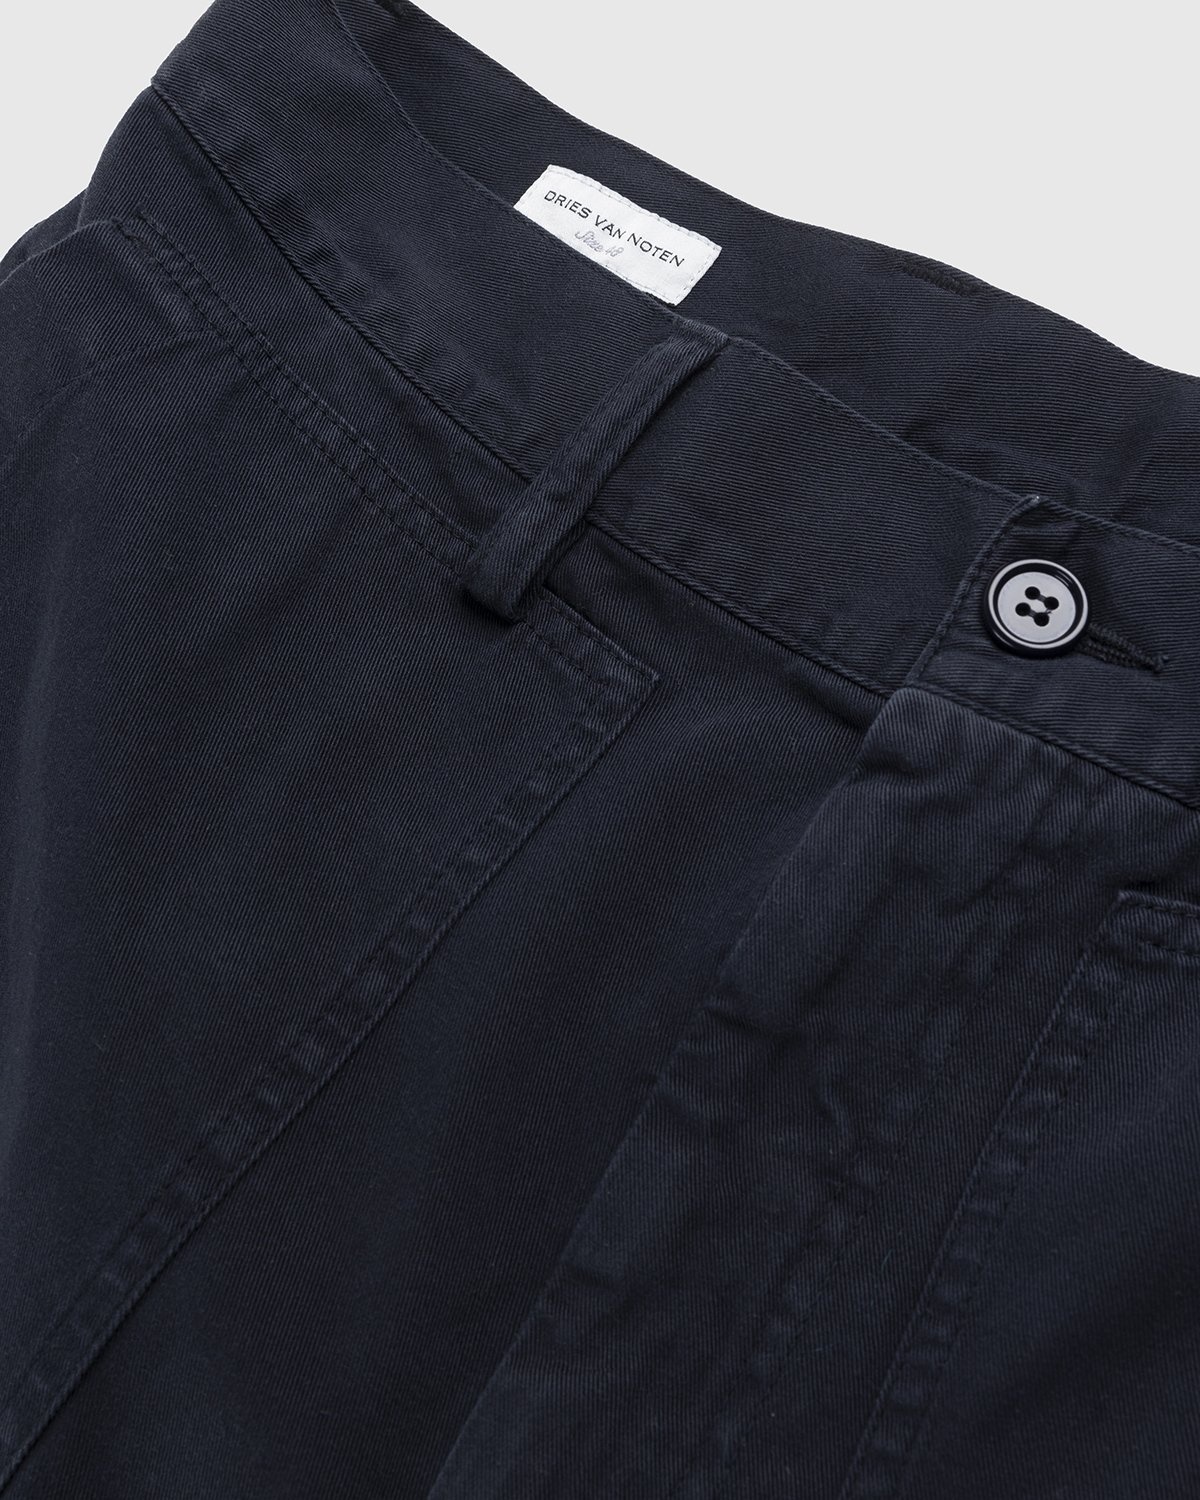 Dries van Noten – Pilson Pants Navy - Trousers - Blue - Image 5